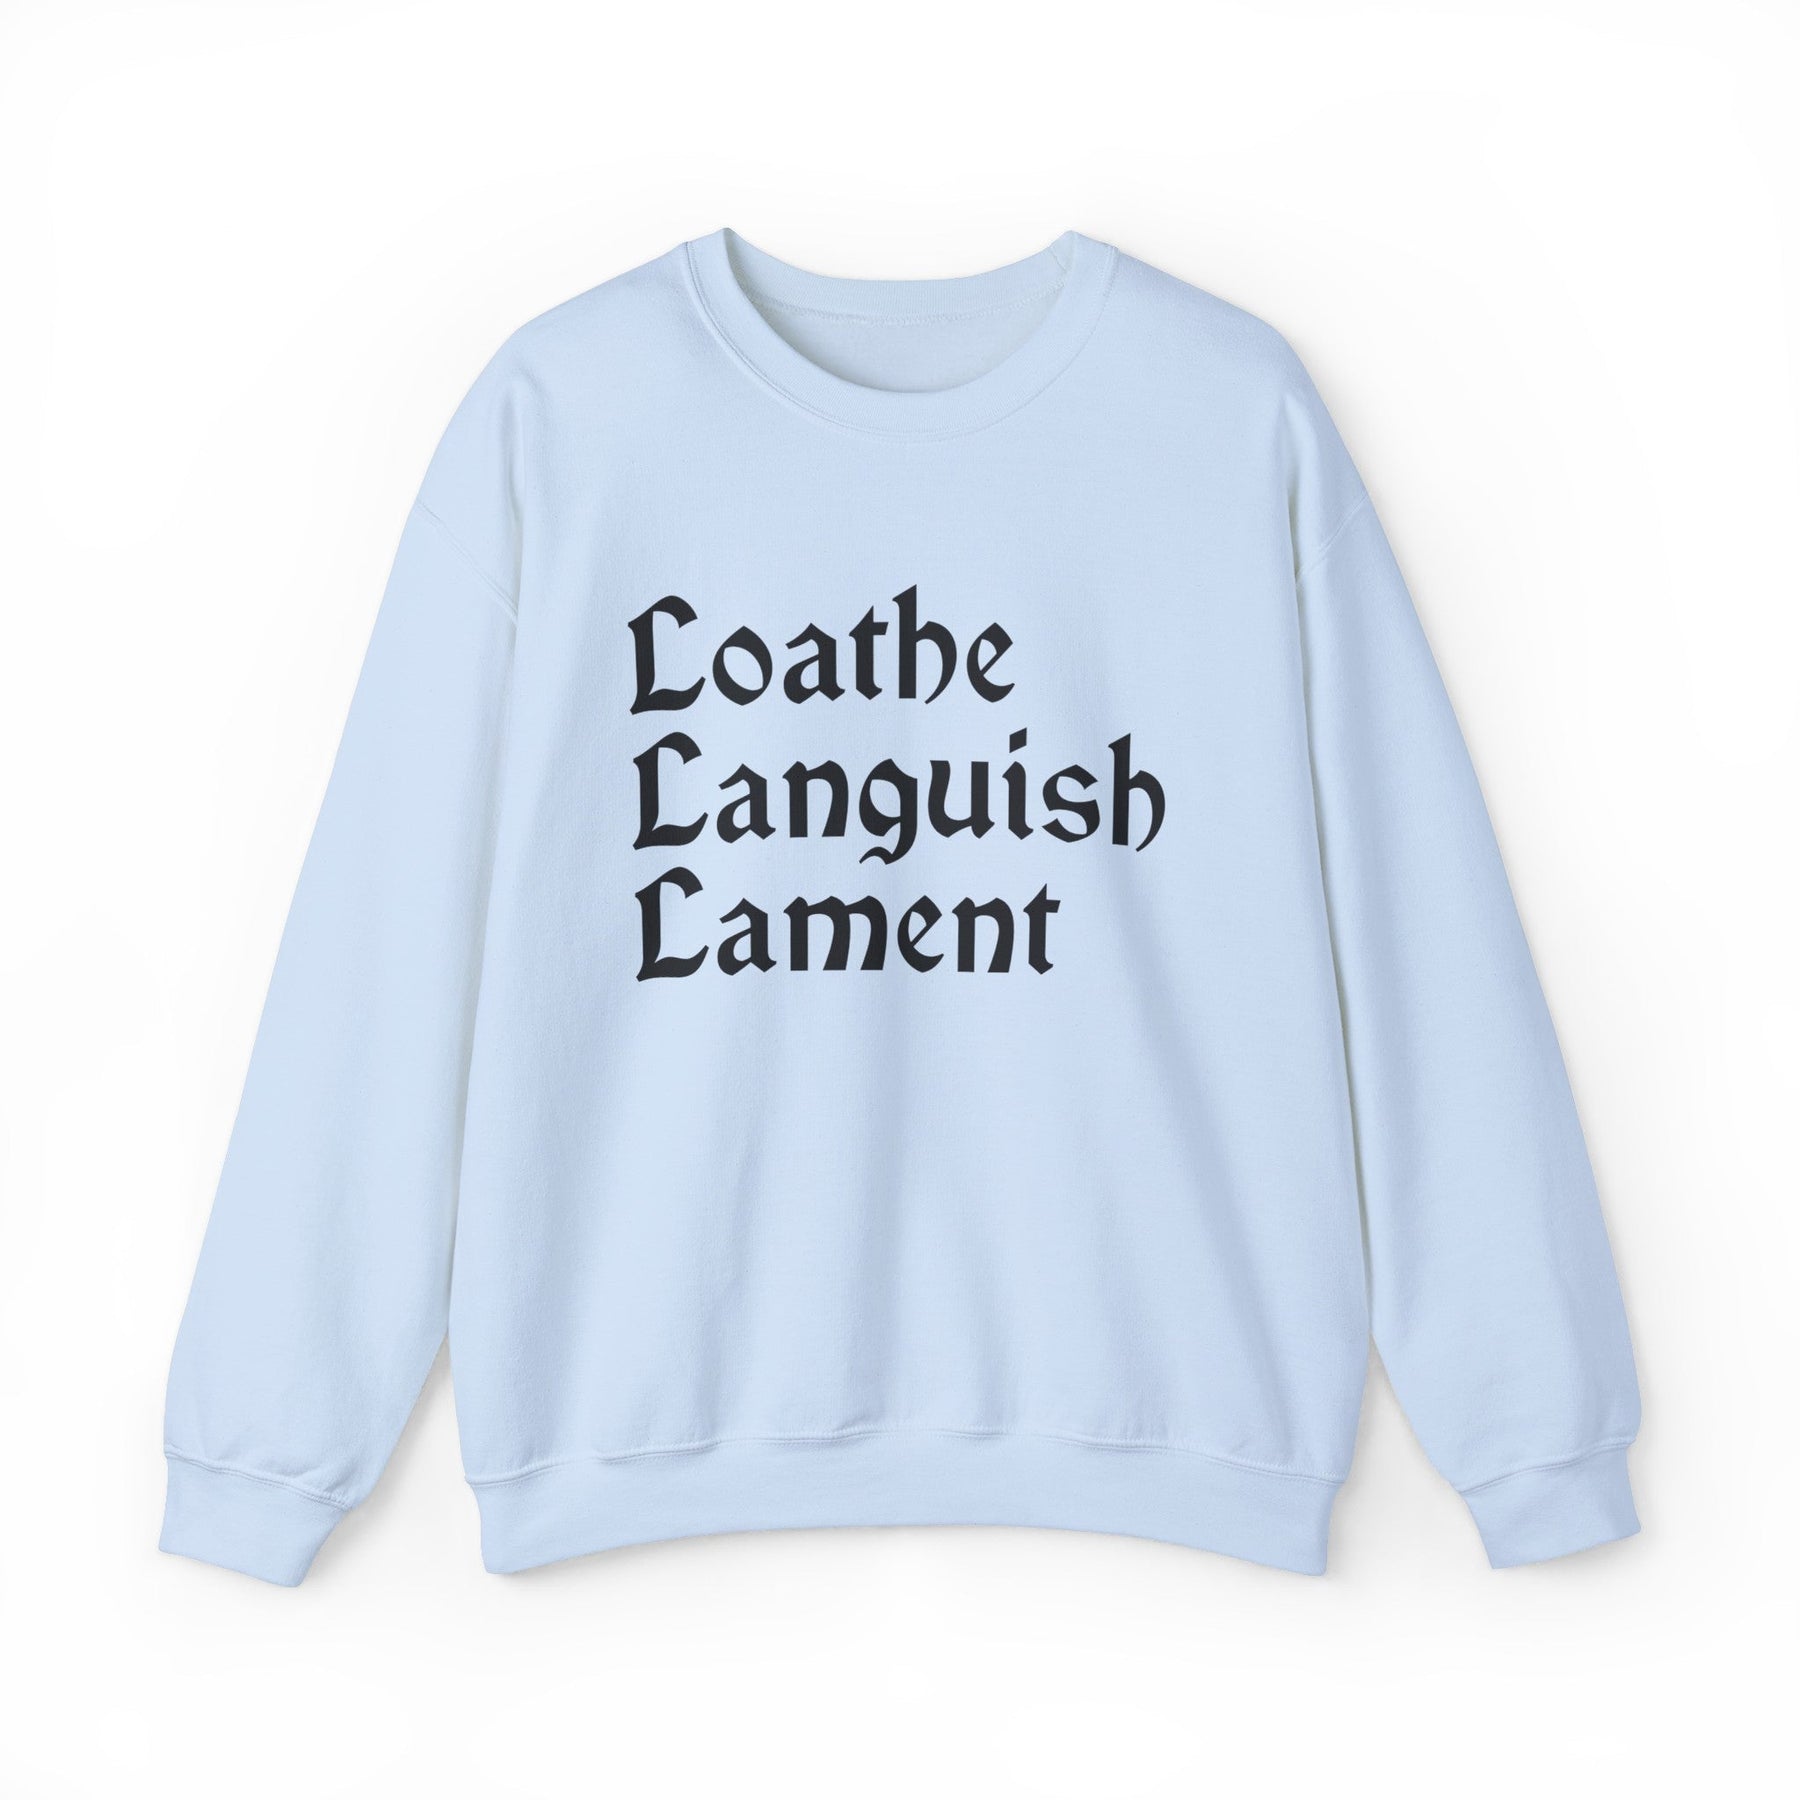 Loathe Languish Lament Gothic Crew Neck Sweatshirt - Goth Cloth Co.Sweatshirt71996779877877600053